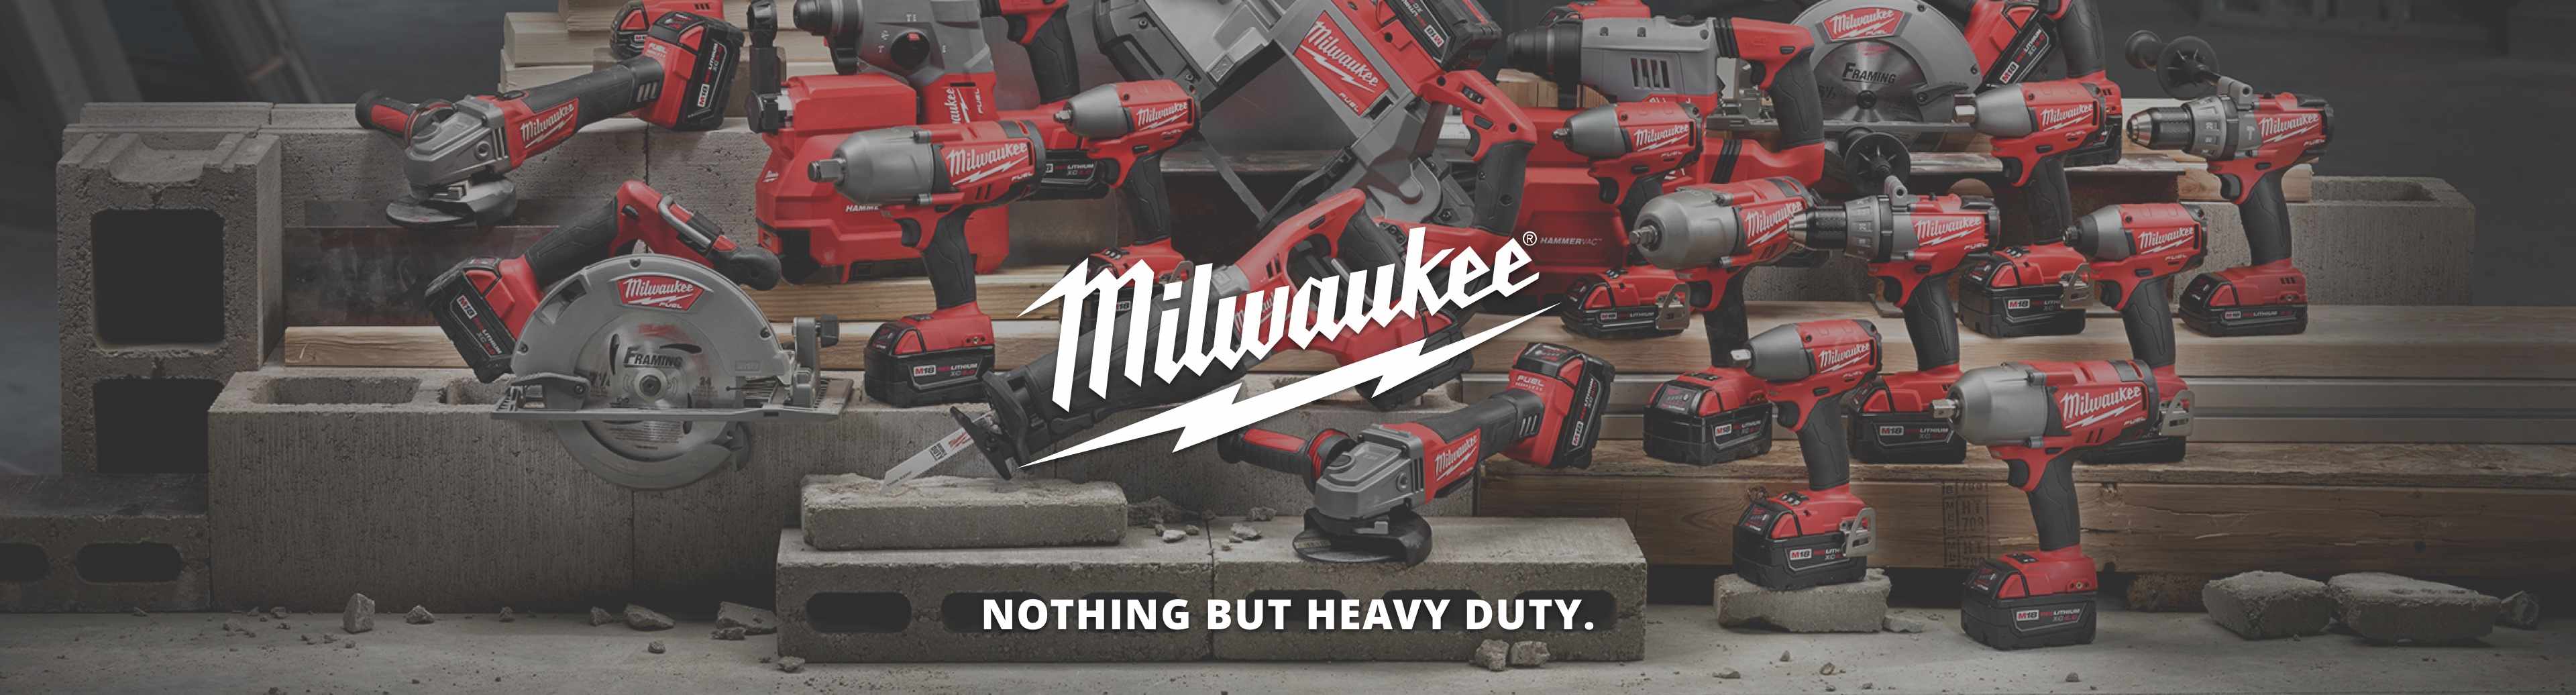 Shop Milwaukee power tools from Everitt-Moore